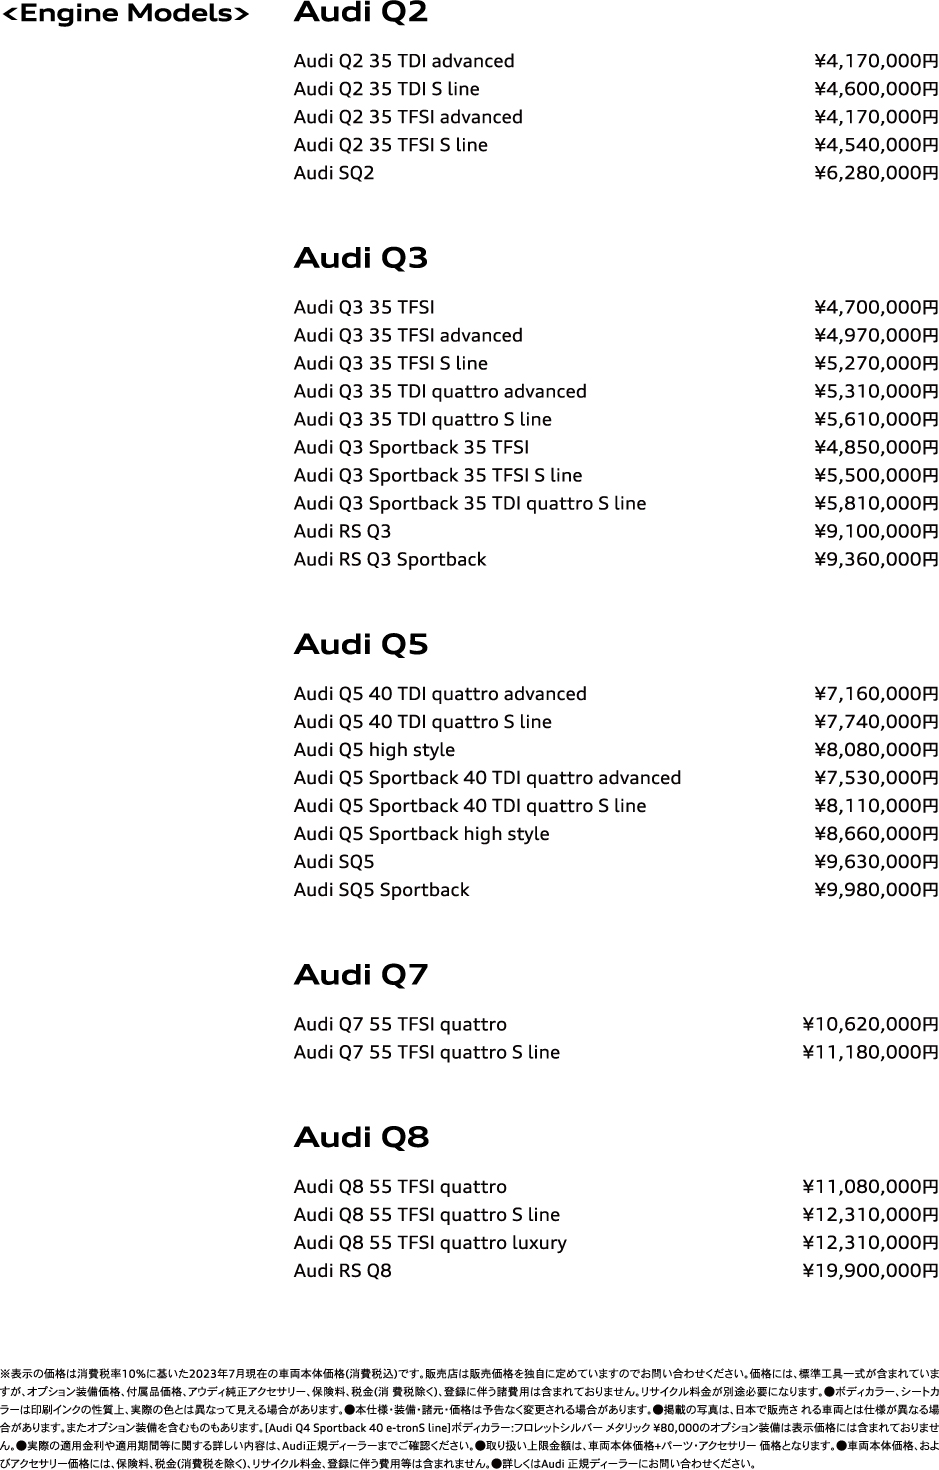 Audi SUV Lineup